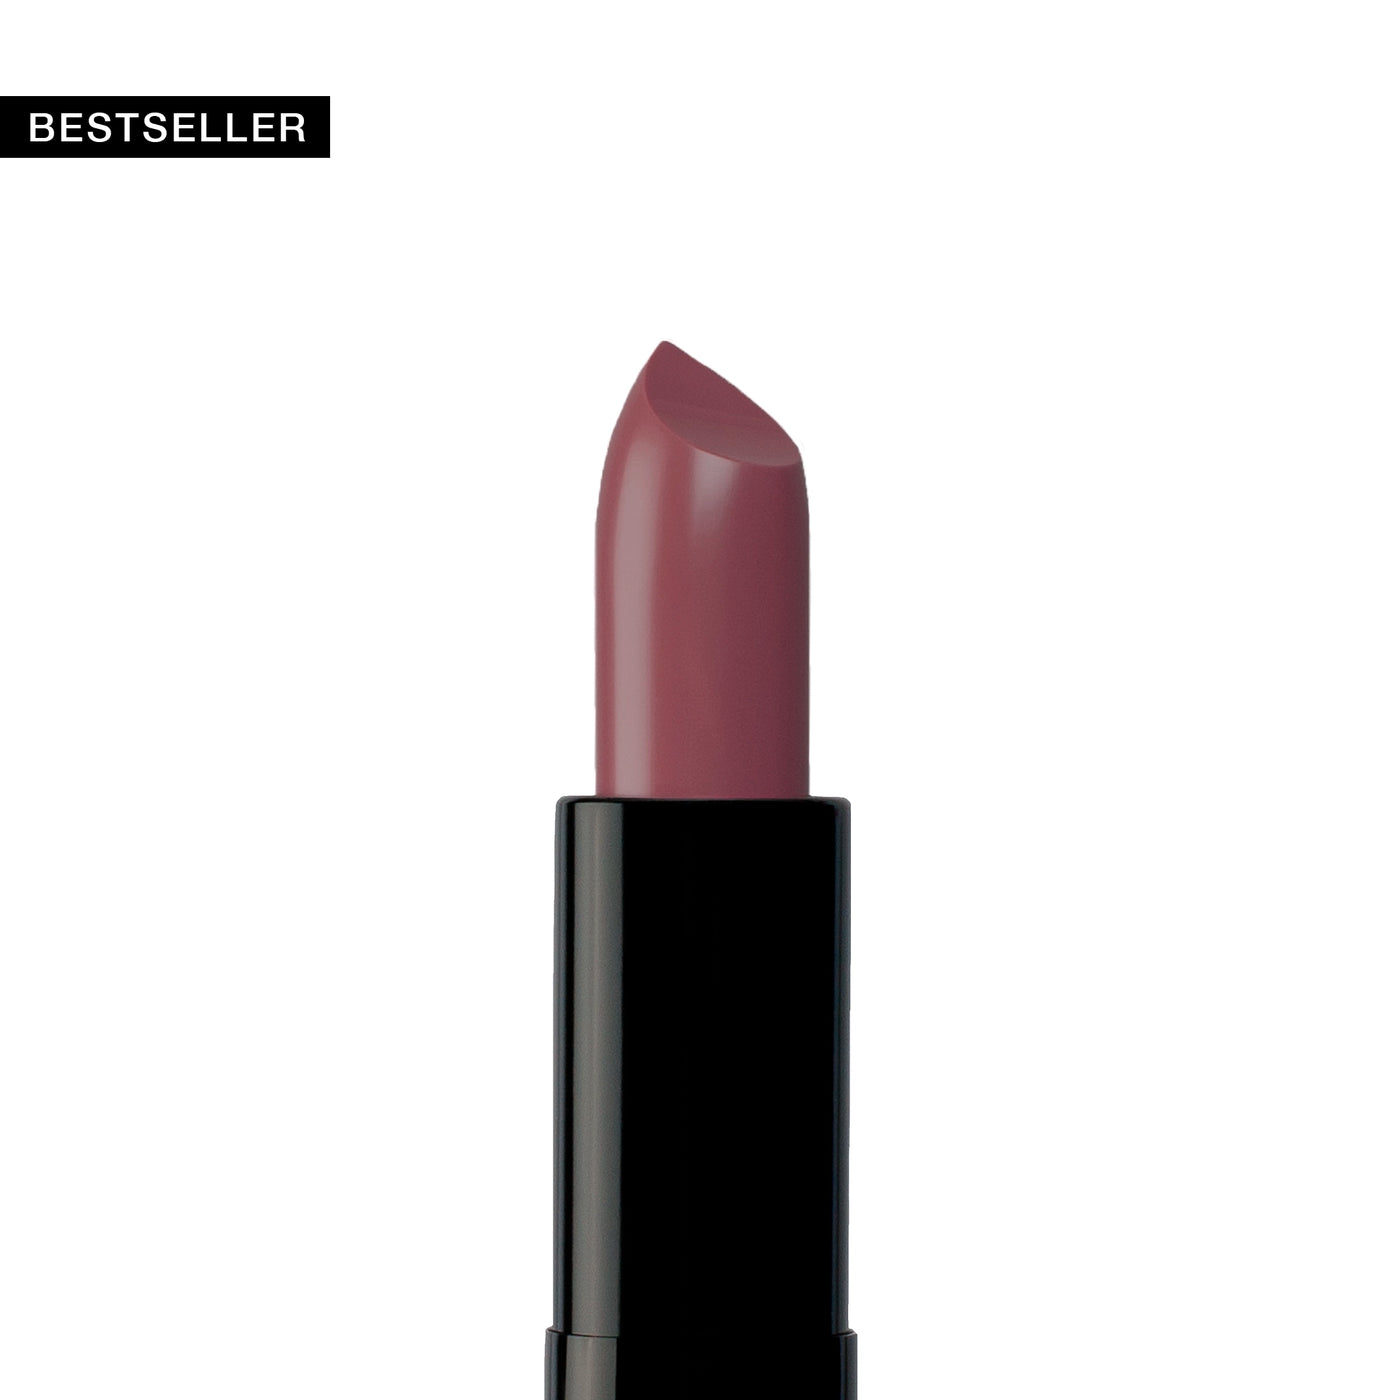 Day Dreamer - Luxury Balm Lipstick